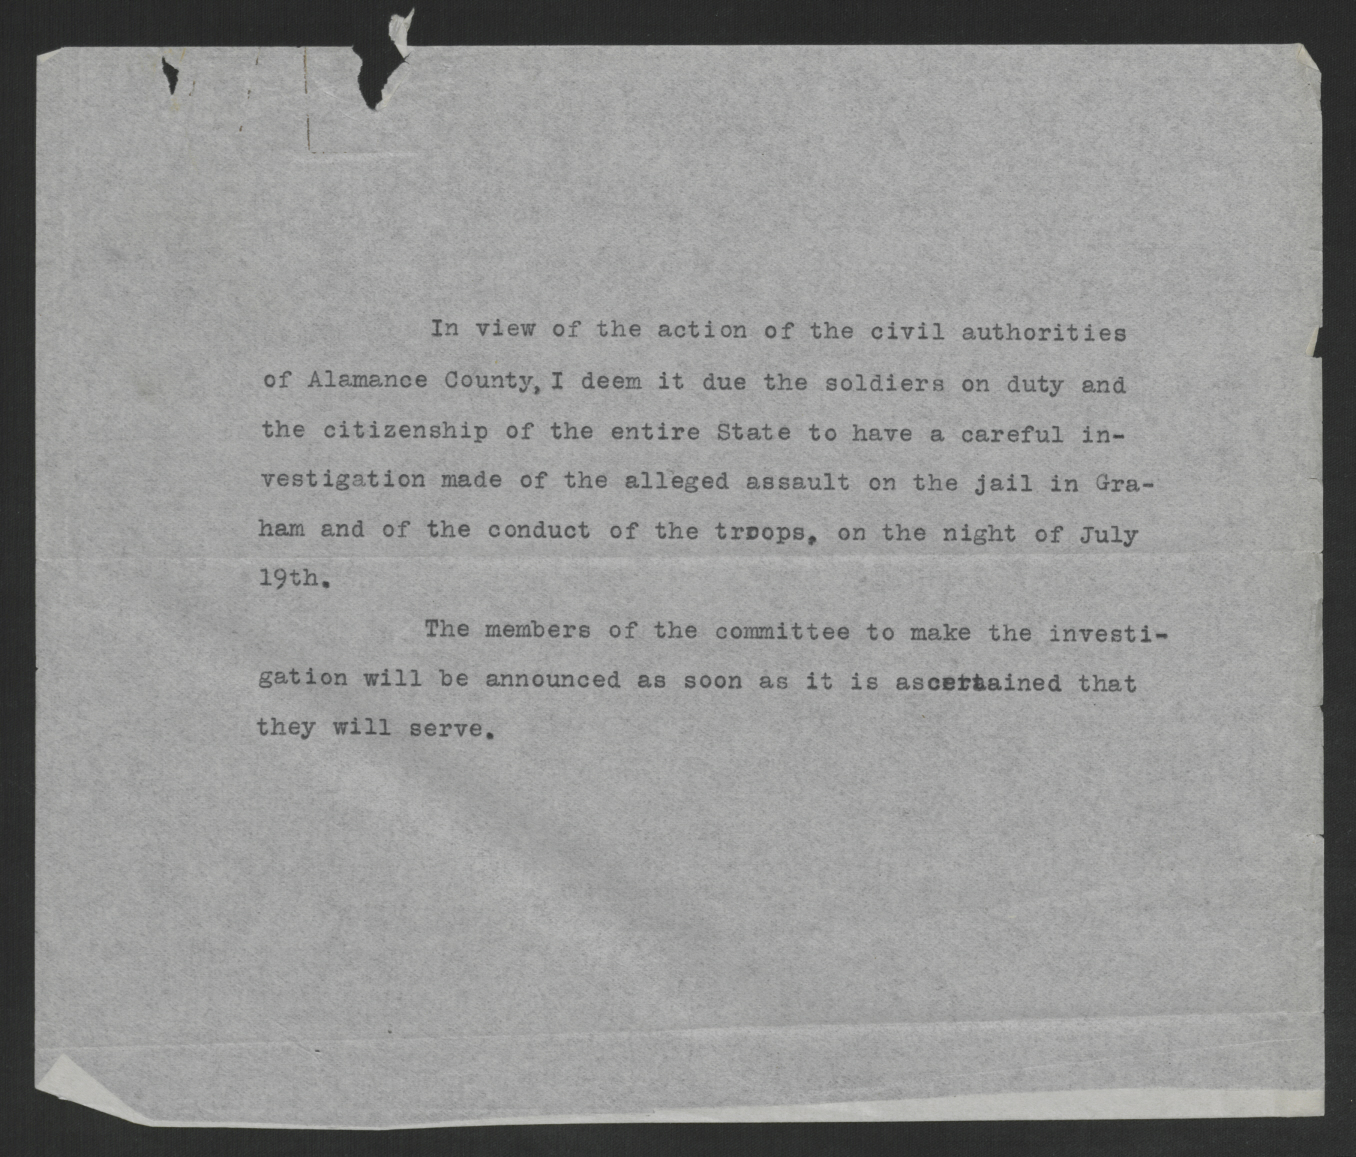 Press Statement by Thomas W. Bickett on Alamance County Lynch Mob, July 22, 1920